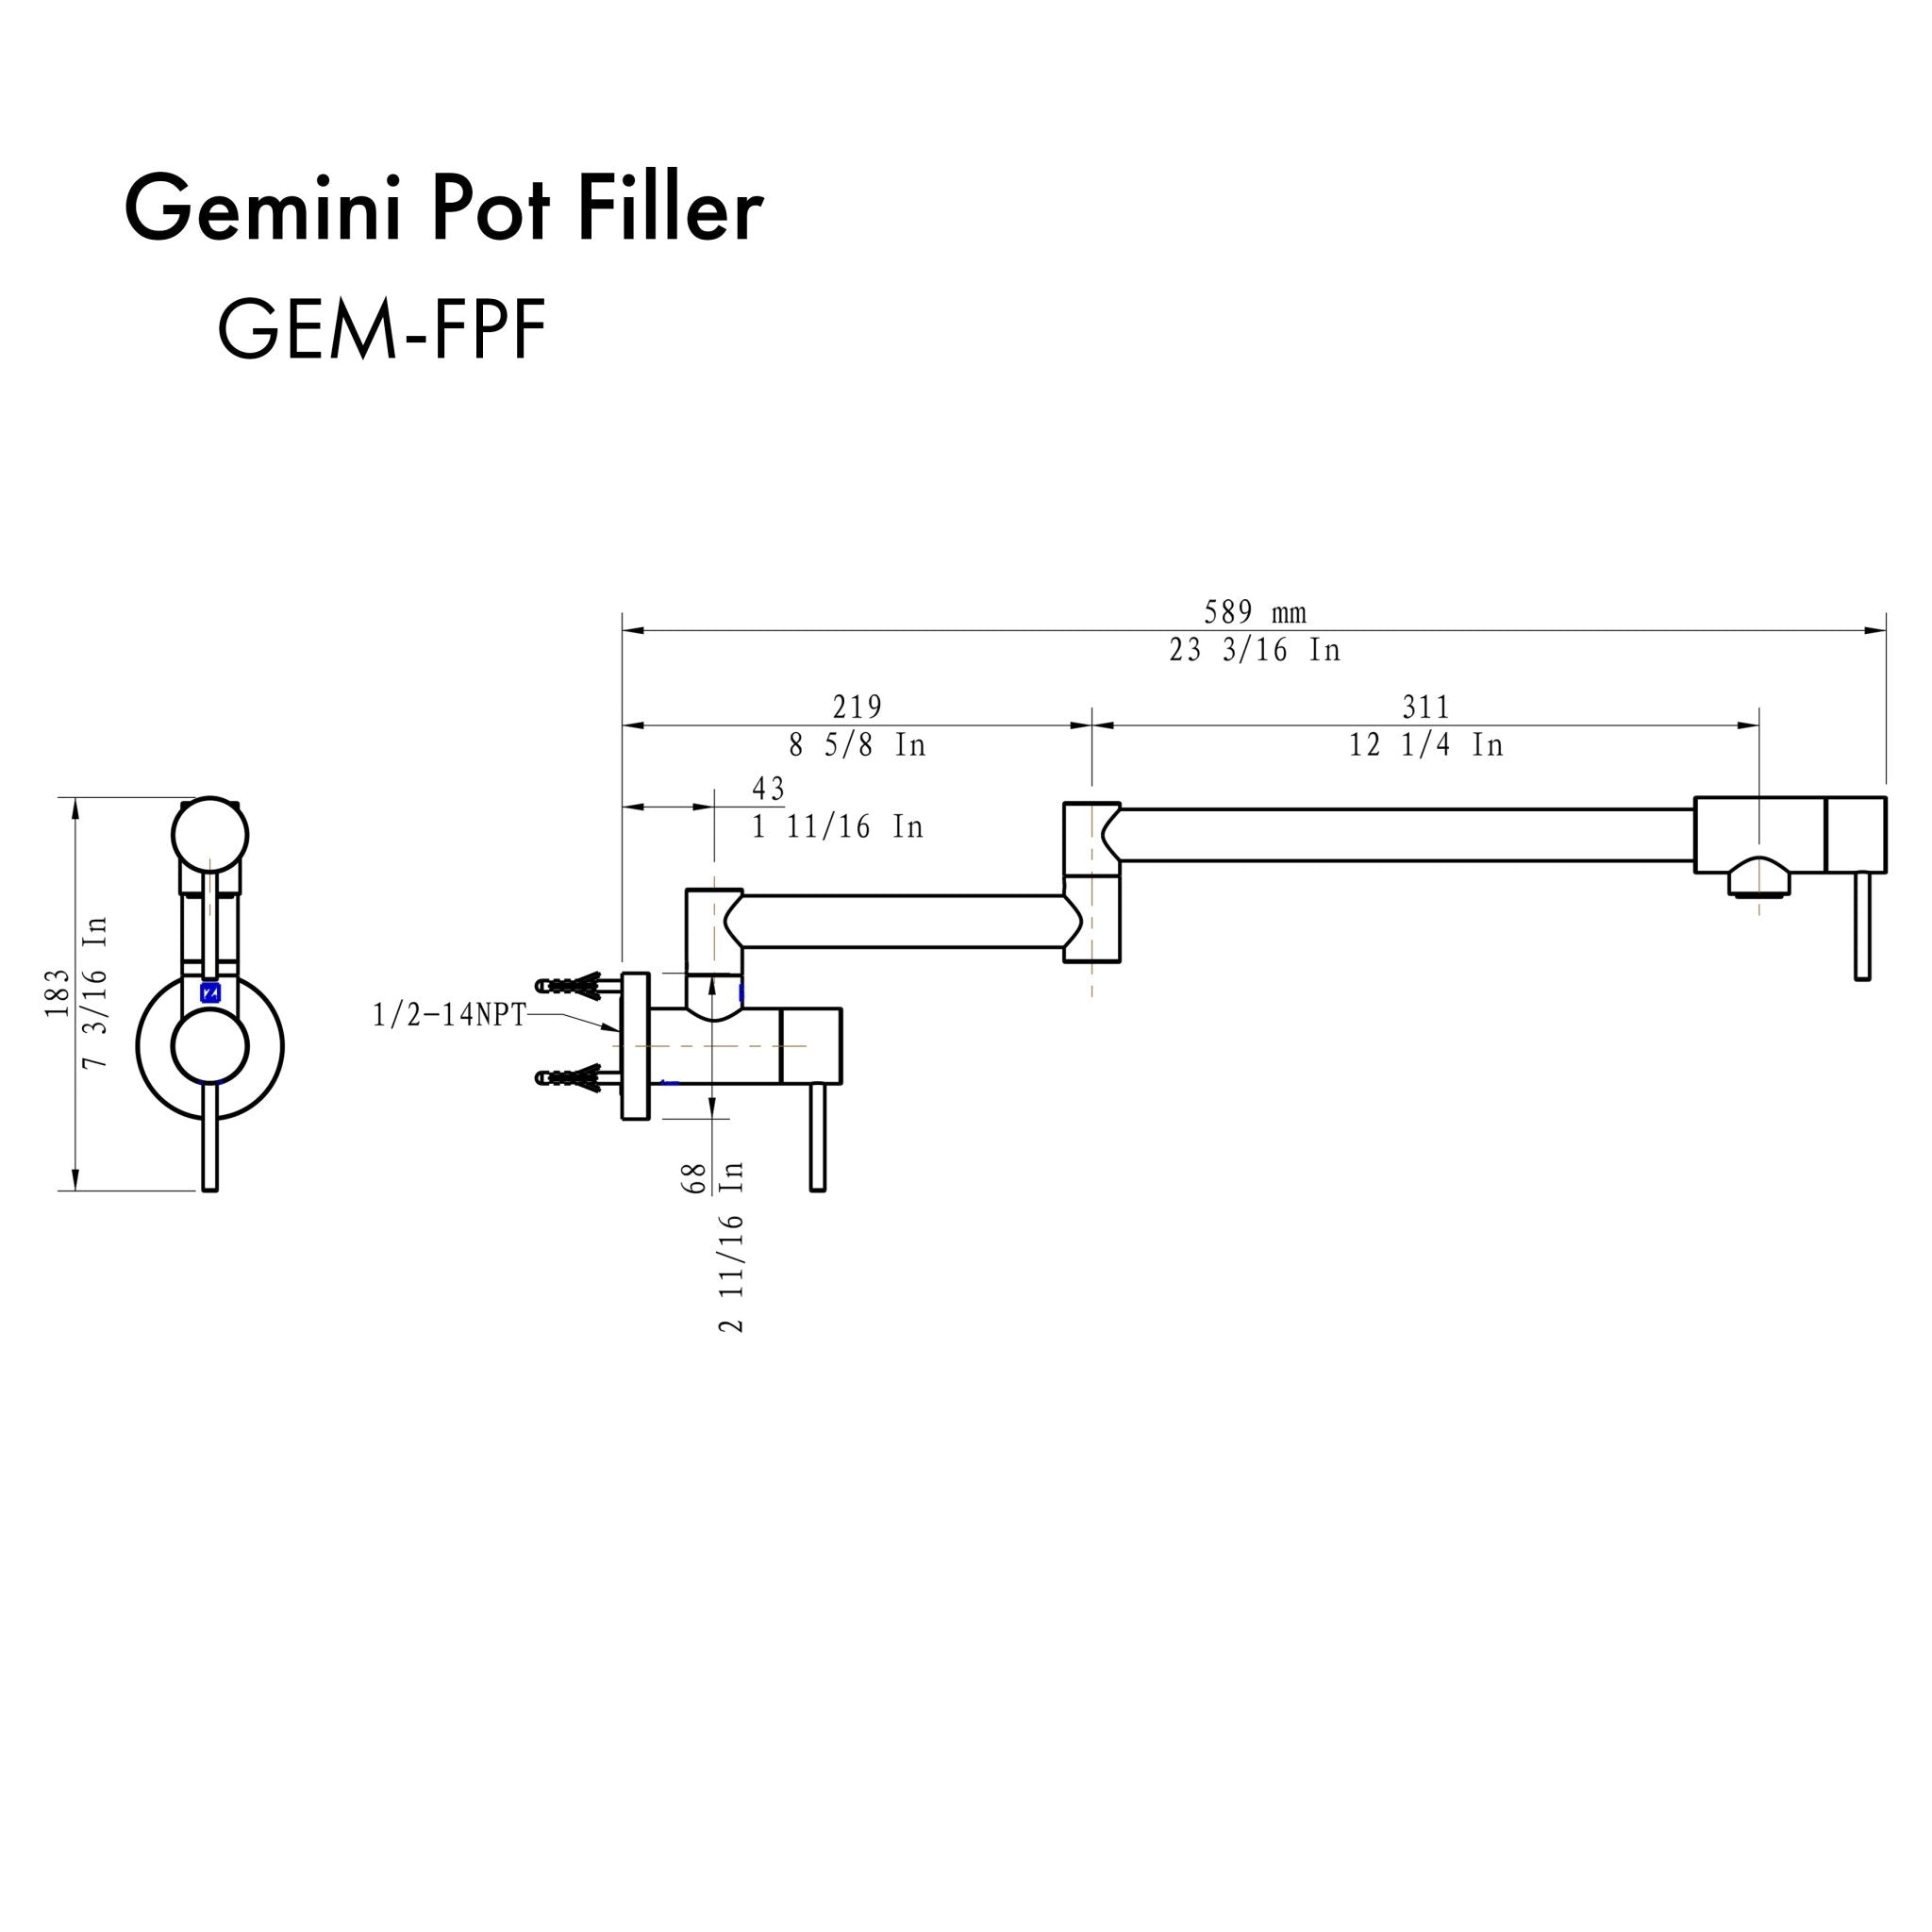 ZLINE Gemini Pot Filler (GEM-FPF) - Dimensions and Measurements